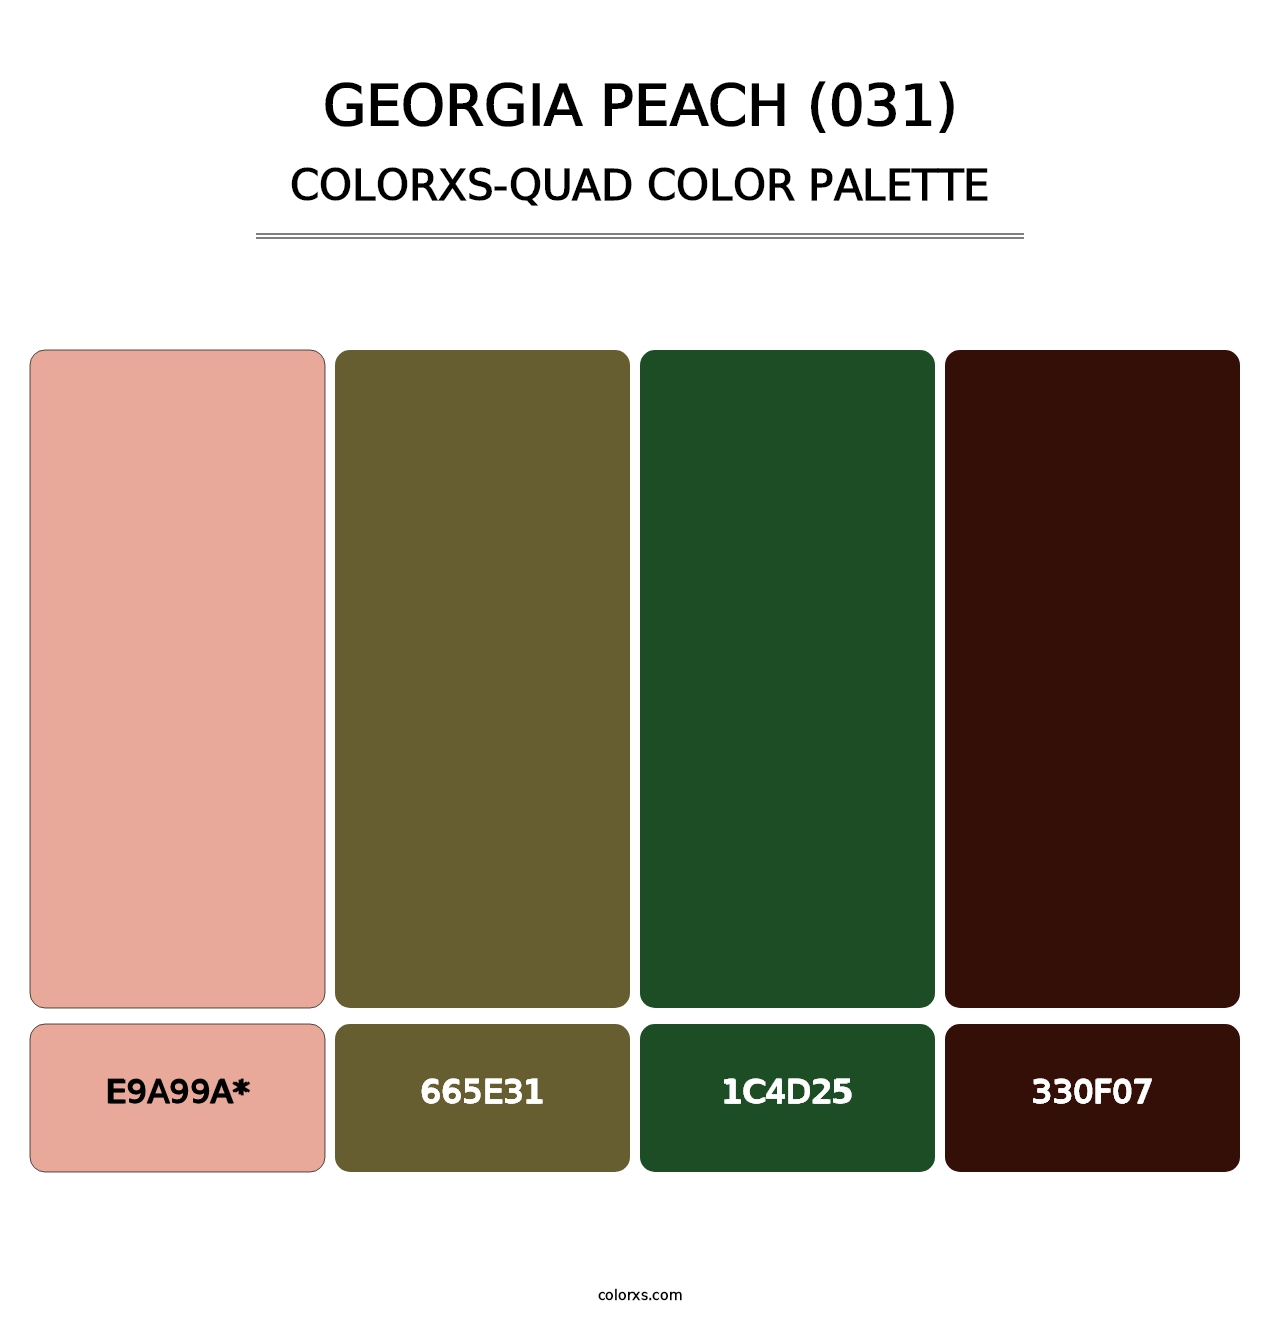 Georgia Peach (031) - Colorxs Quad Palette